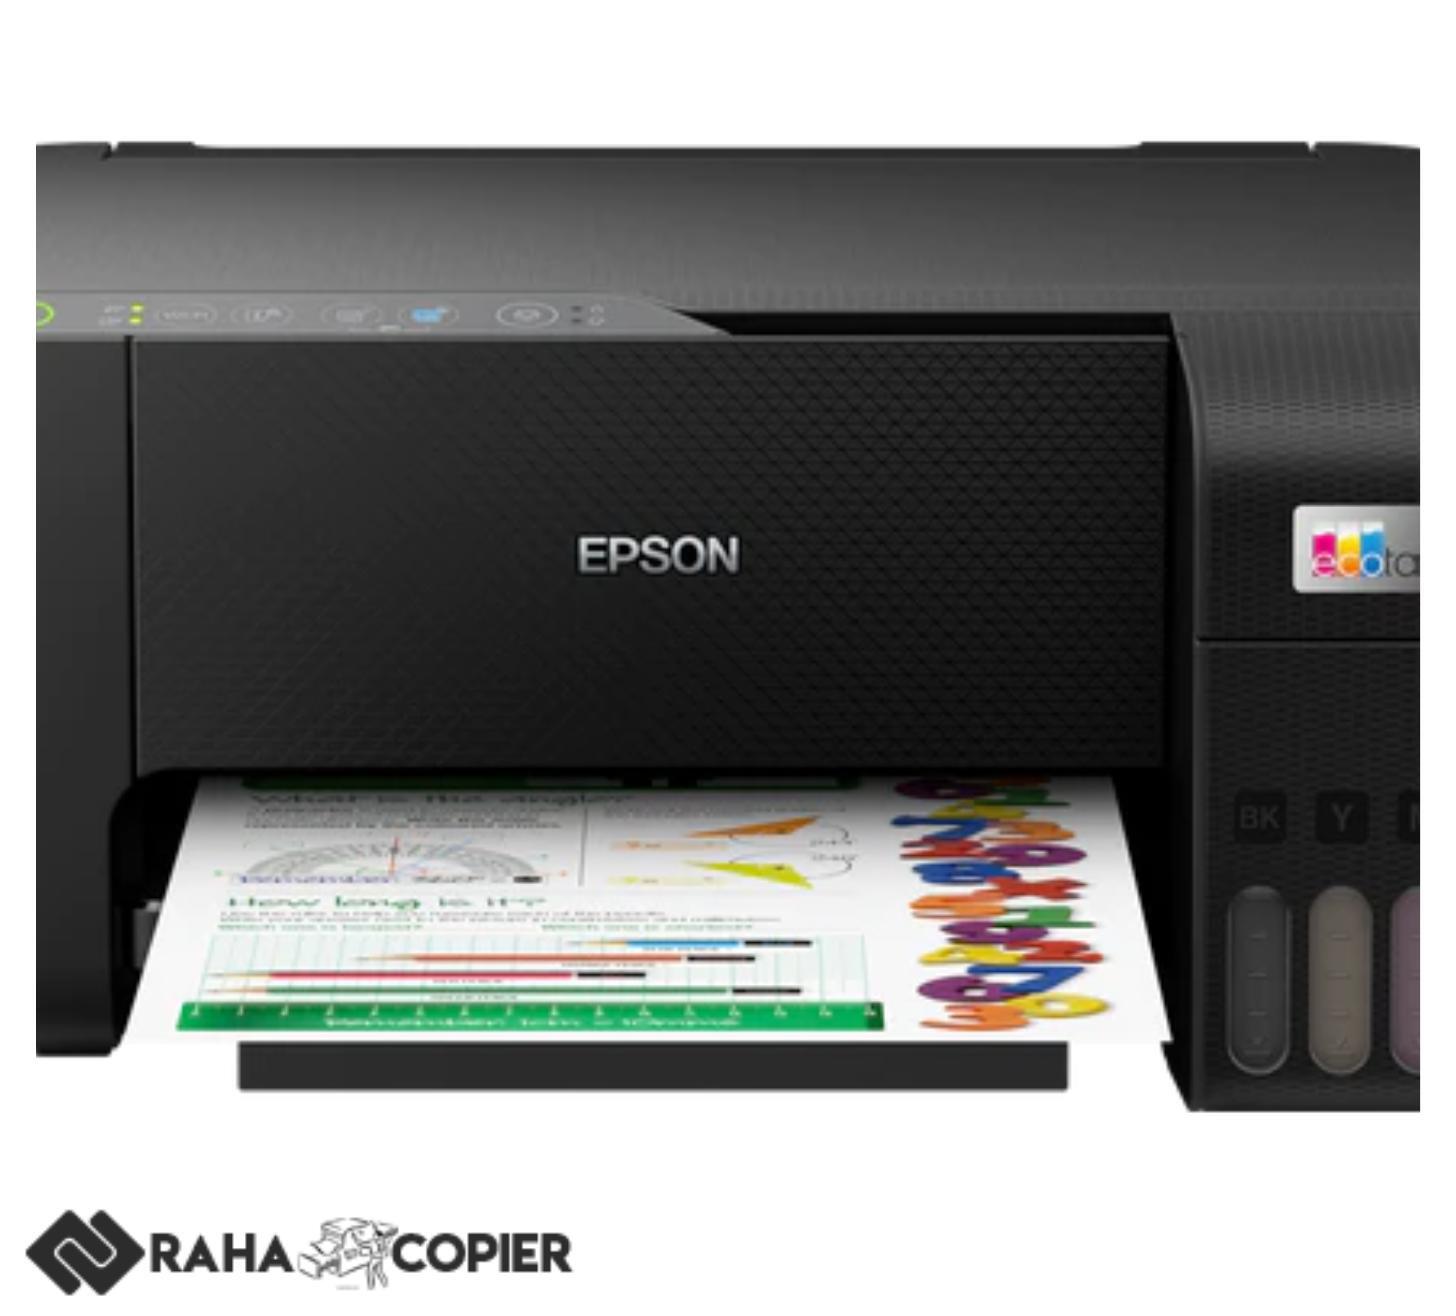 epson printer rental and epson printer for sale